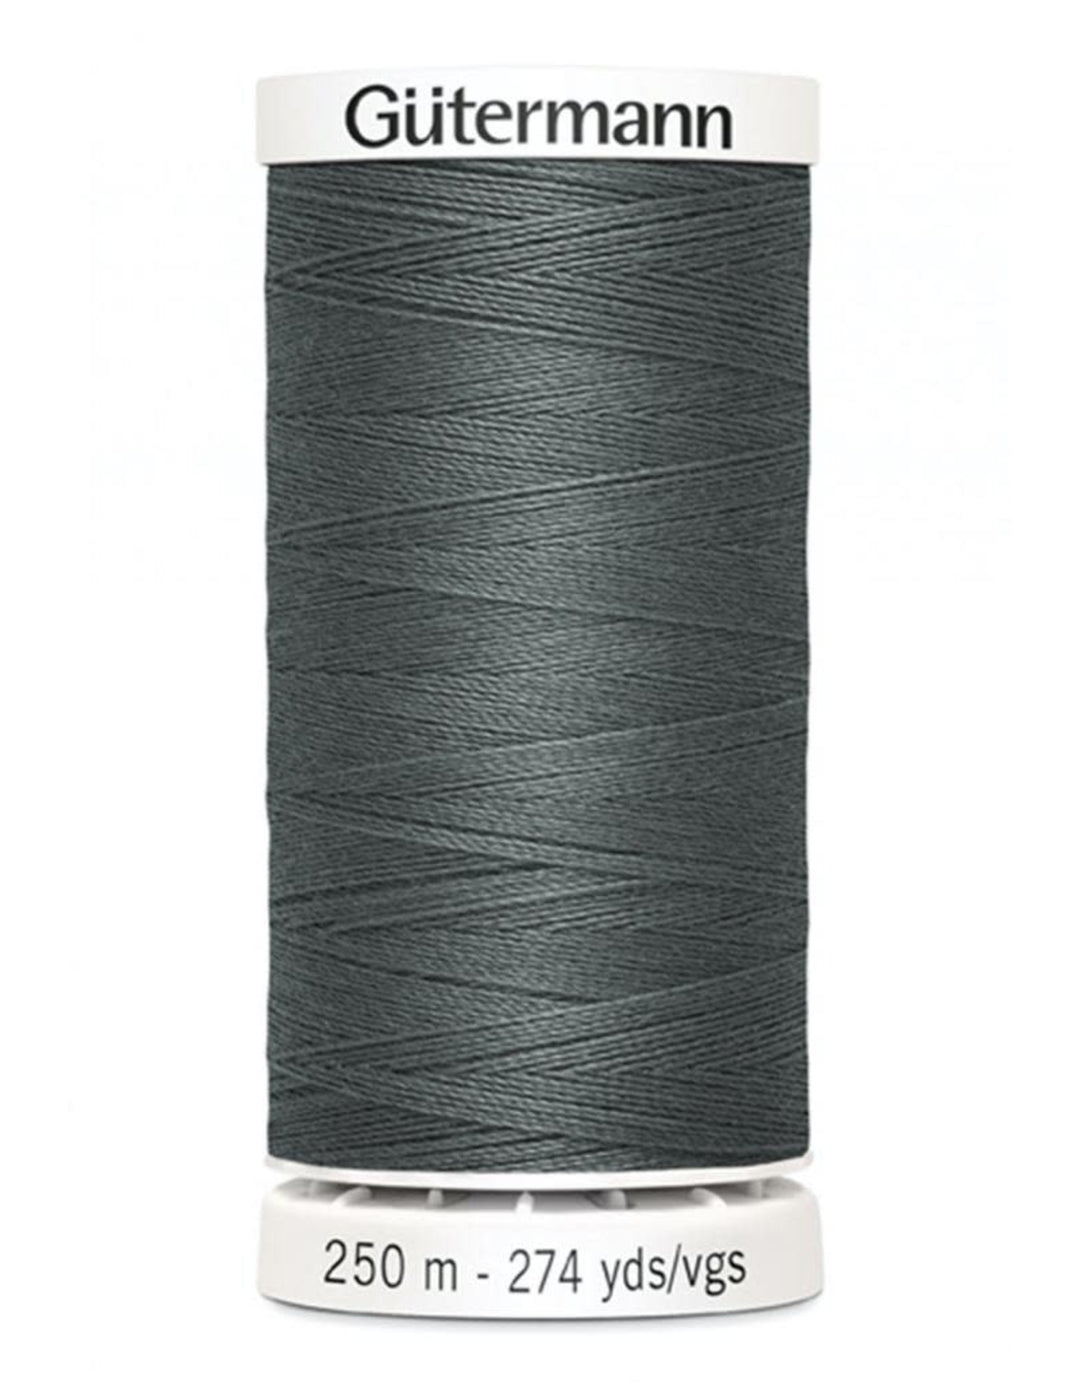 Gutermann Sew-all Polyester All Purpose Thread 250m| Dark Gray (250M-239)